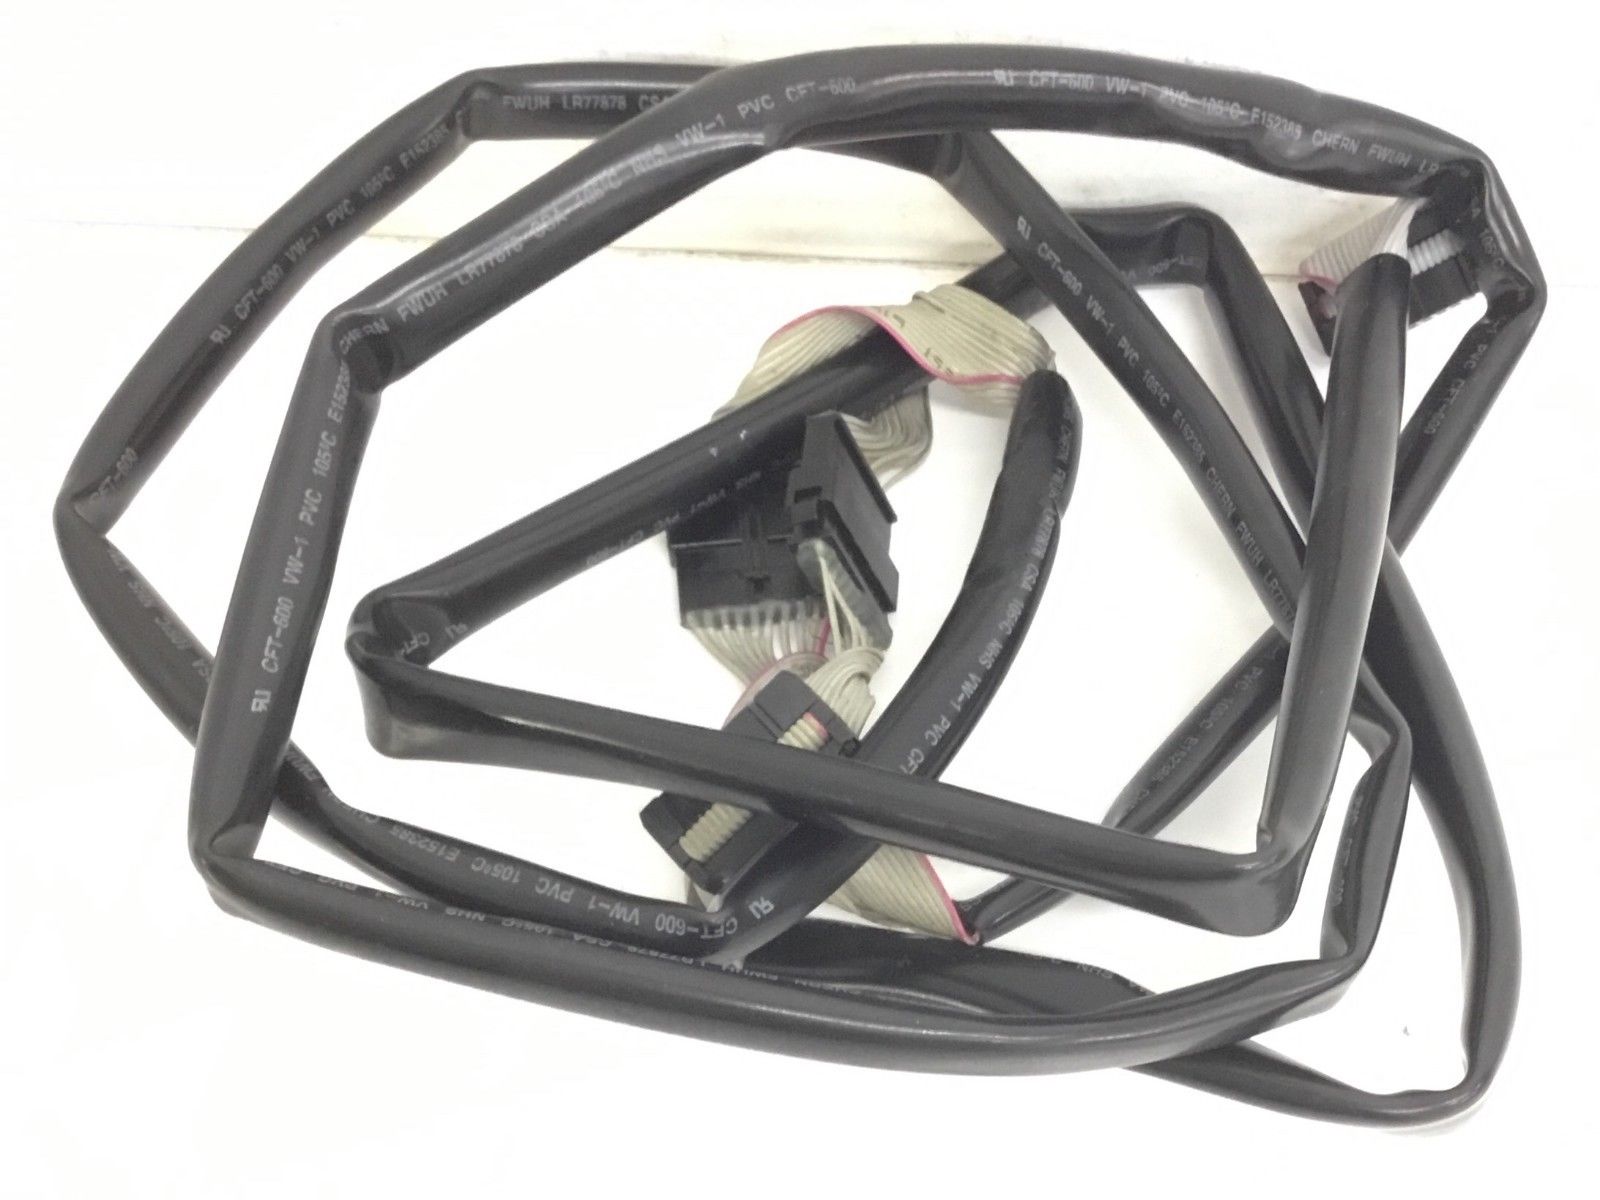 True Fitness PS900 Treadmill Wire Harness (Used)